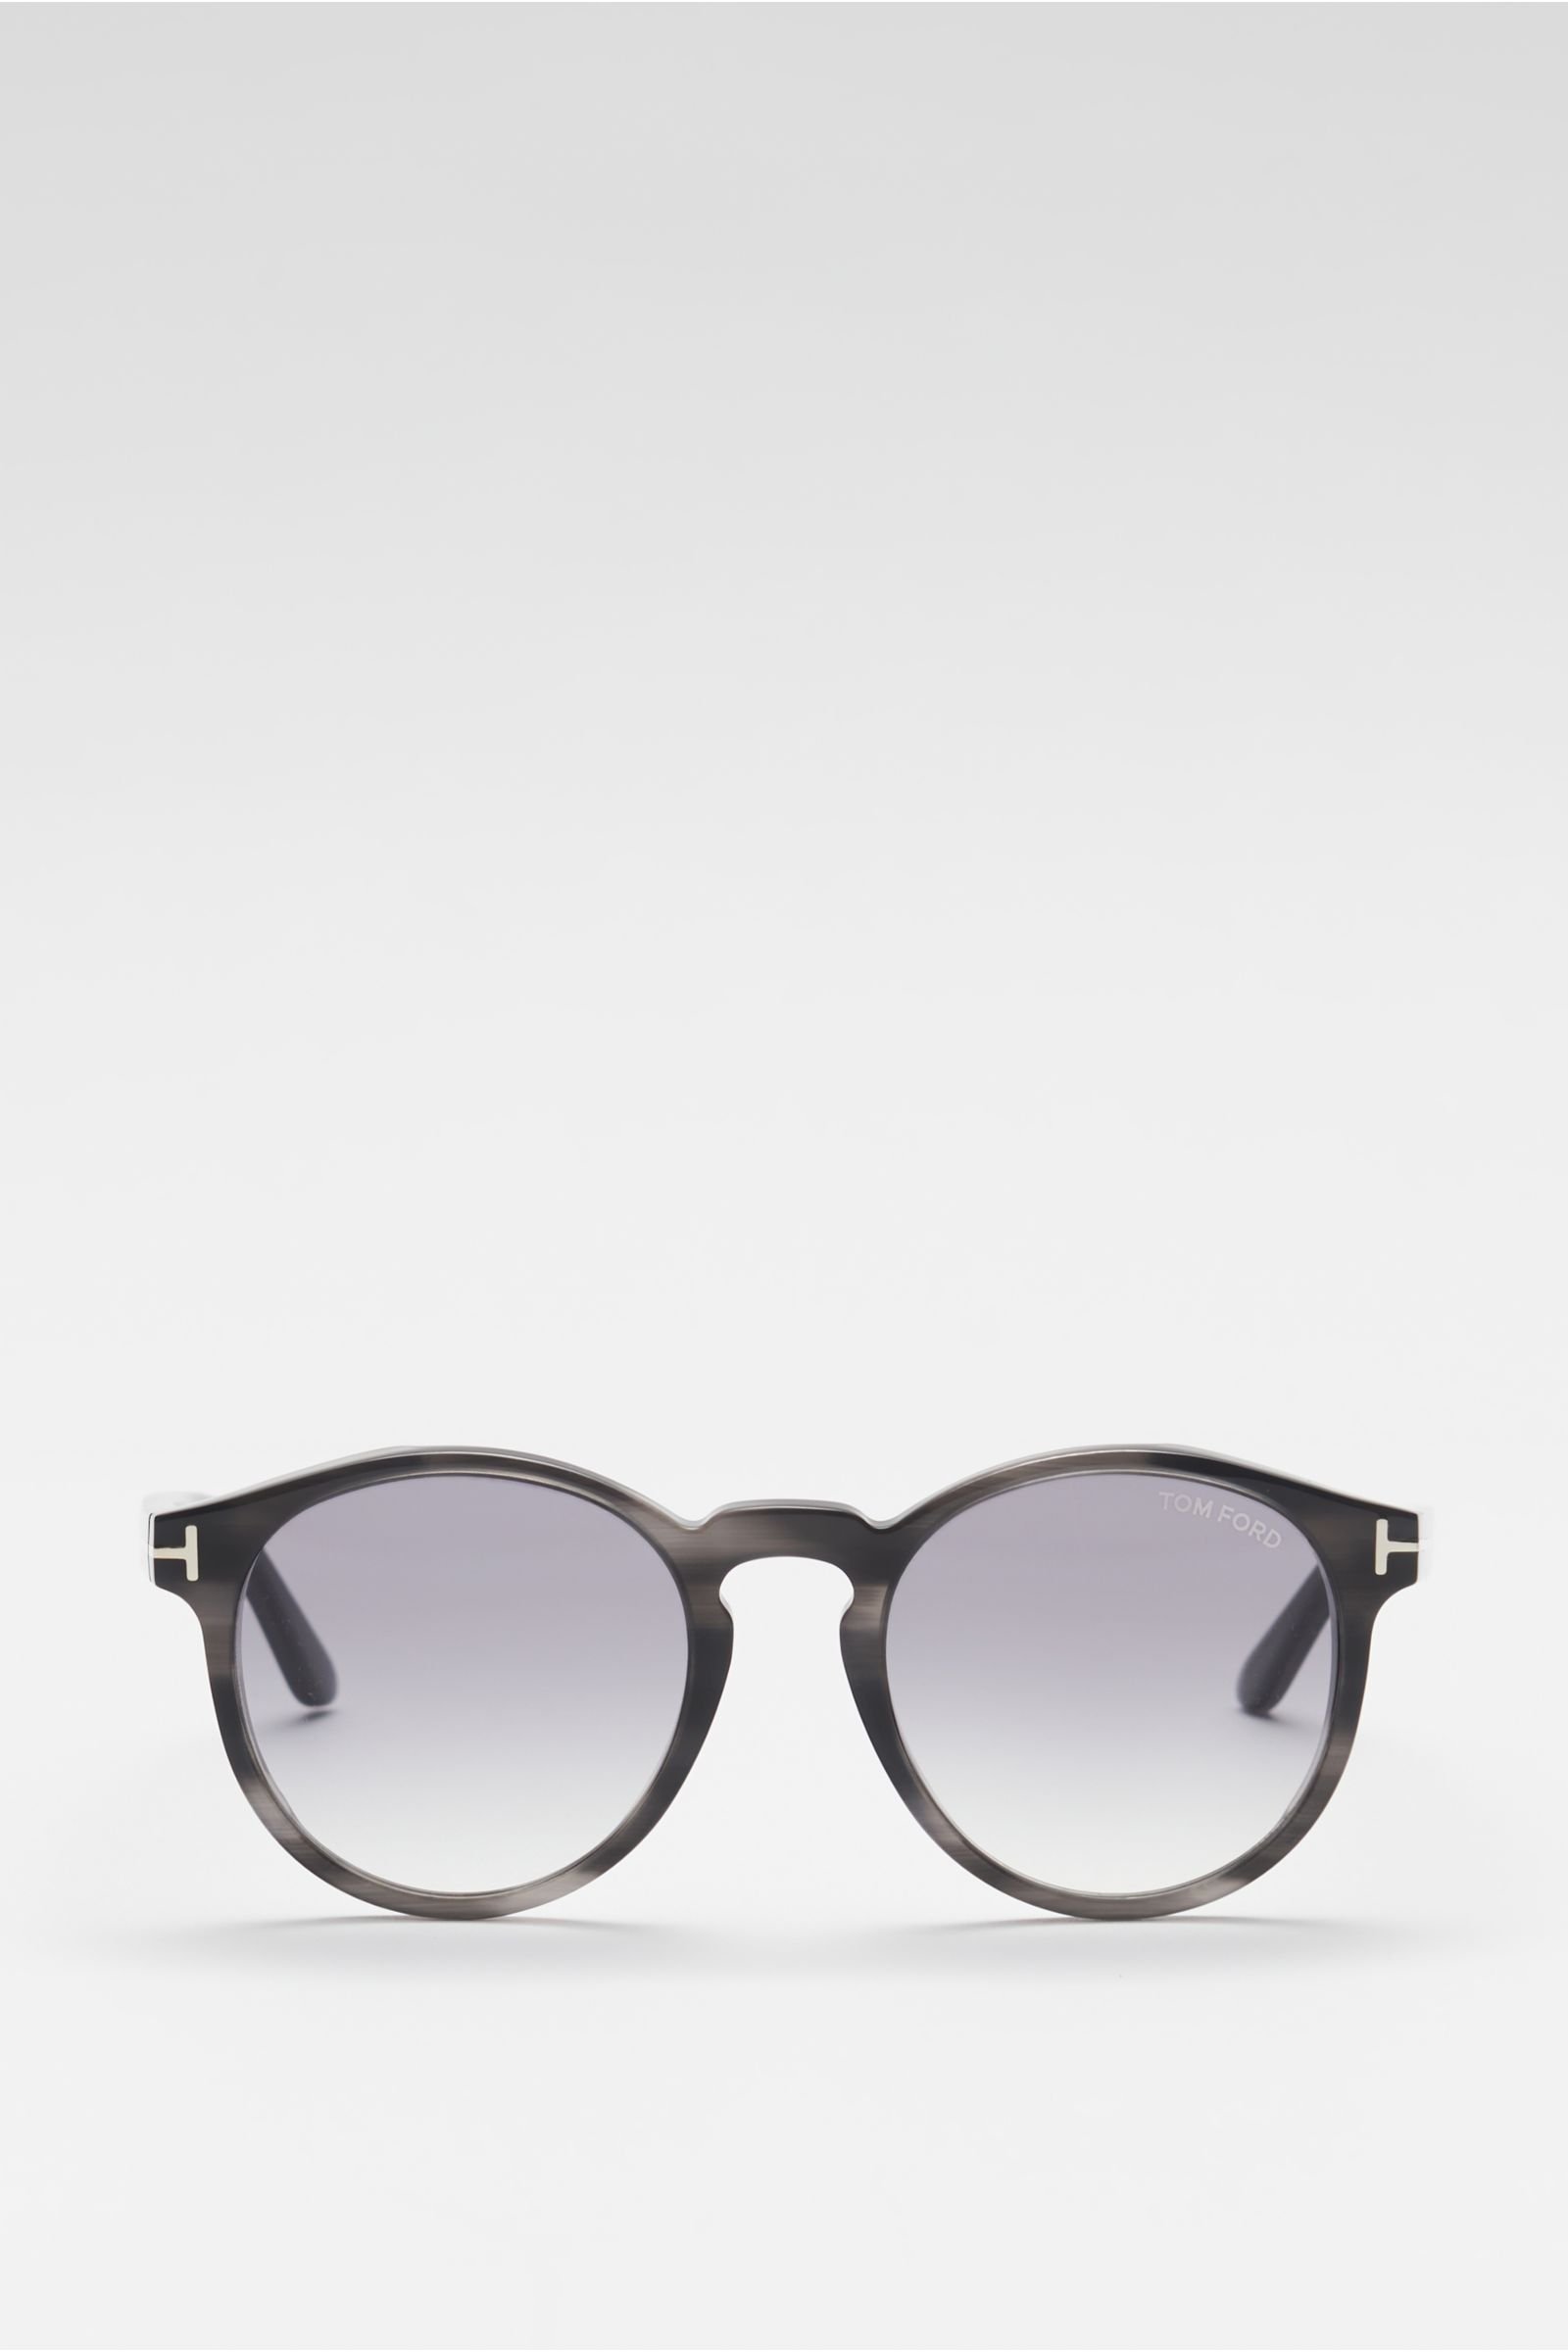 Sunglasses 'Ian' grey patterned/grey